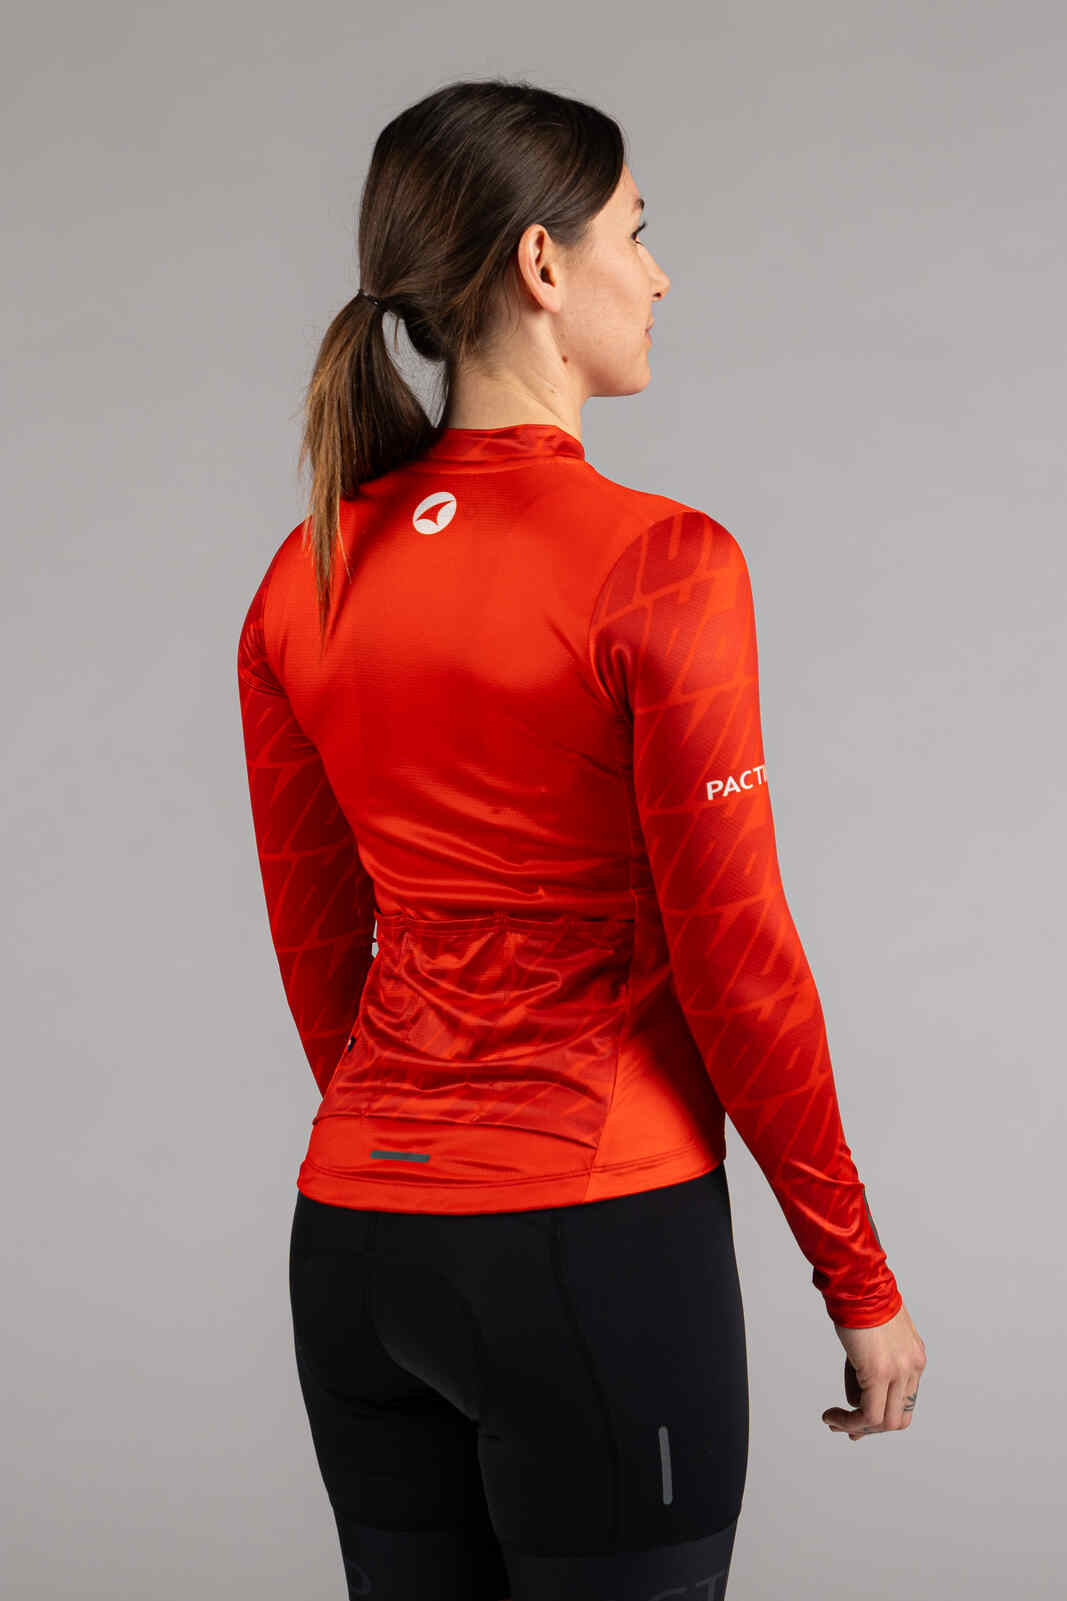 Women's Aero Long Sleeve Red Cycling Jersey - Back View